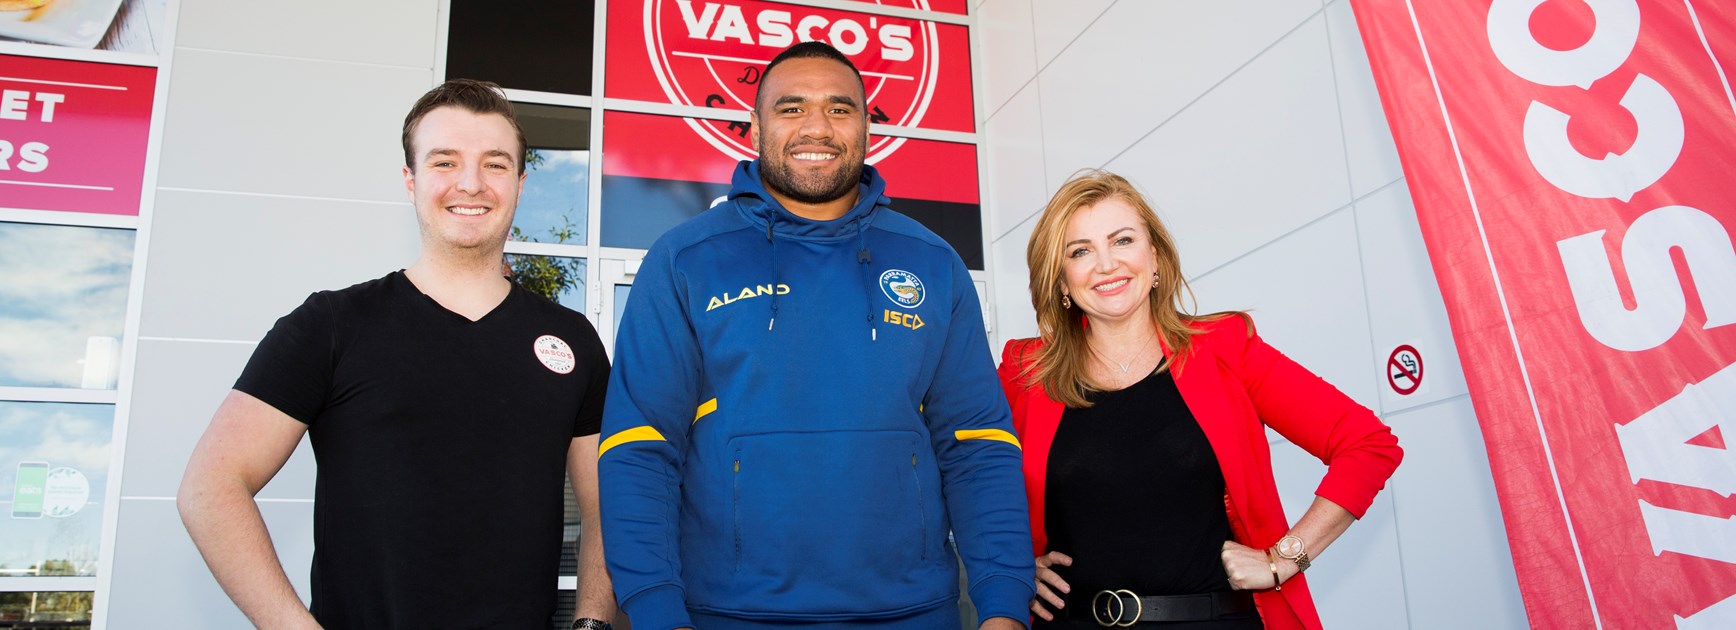 Vasco's becomes Parramatta Eels Membership Sponsor